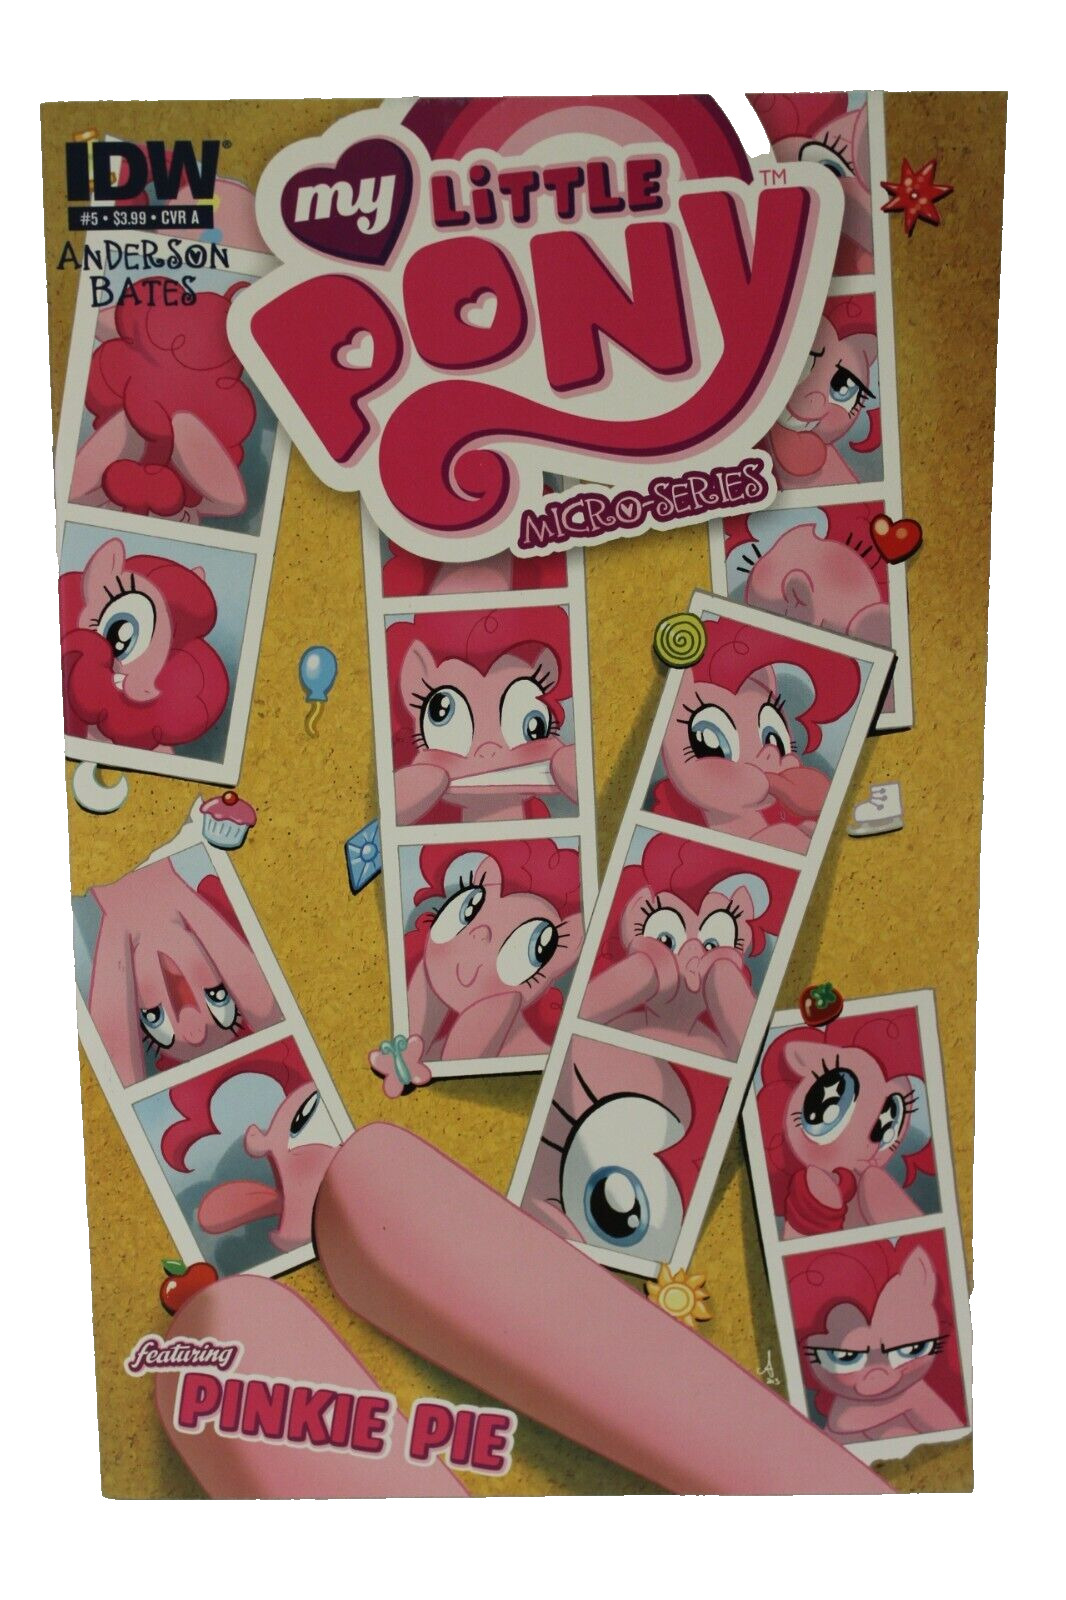 My Little Pony MLP Micro-Series #5 Pinkie Pie Amy Mebberson 2013 IDW Comics F+